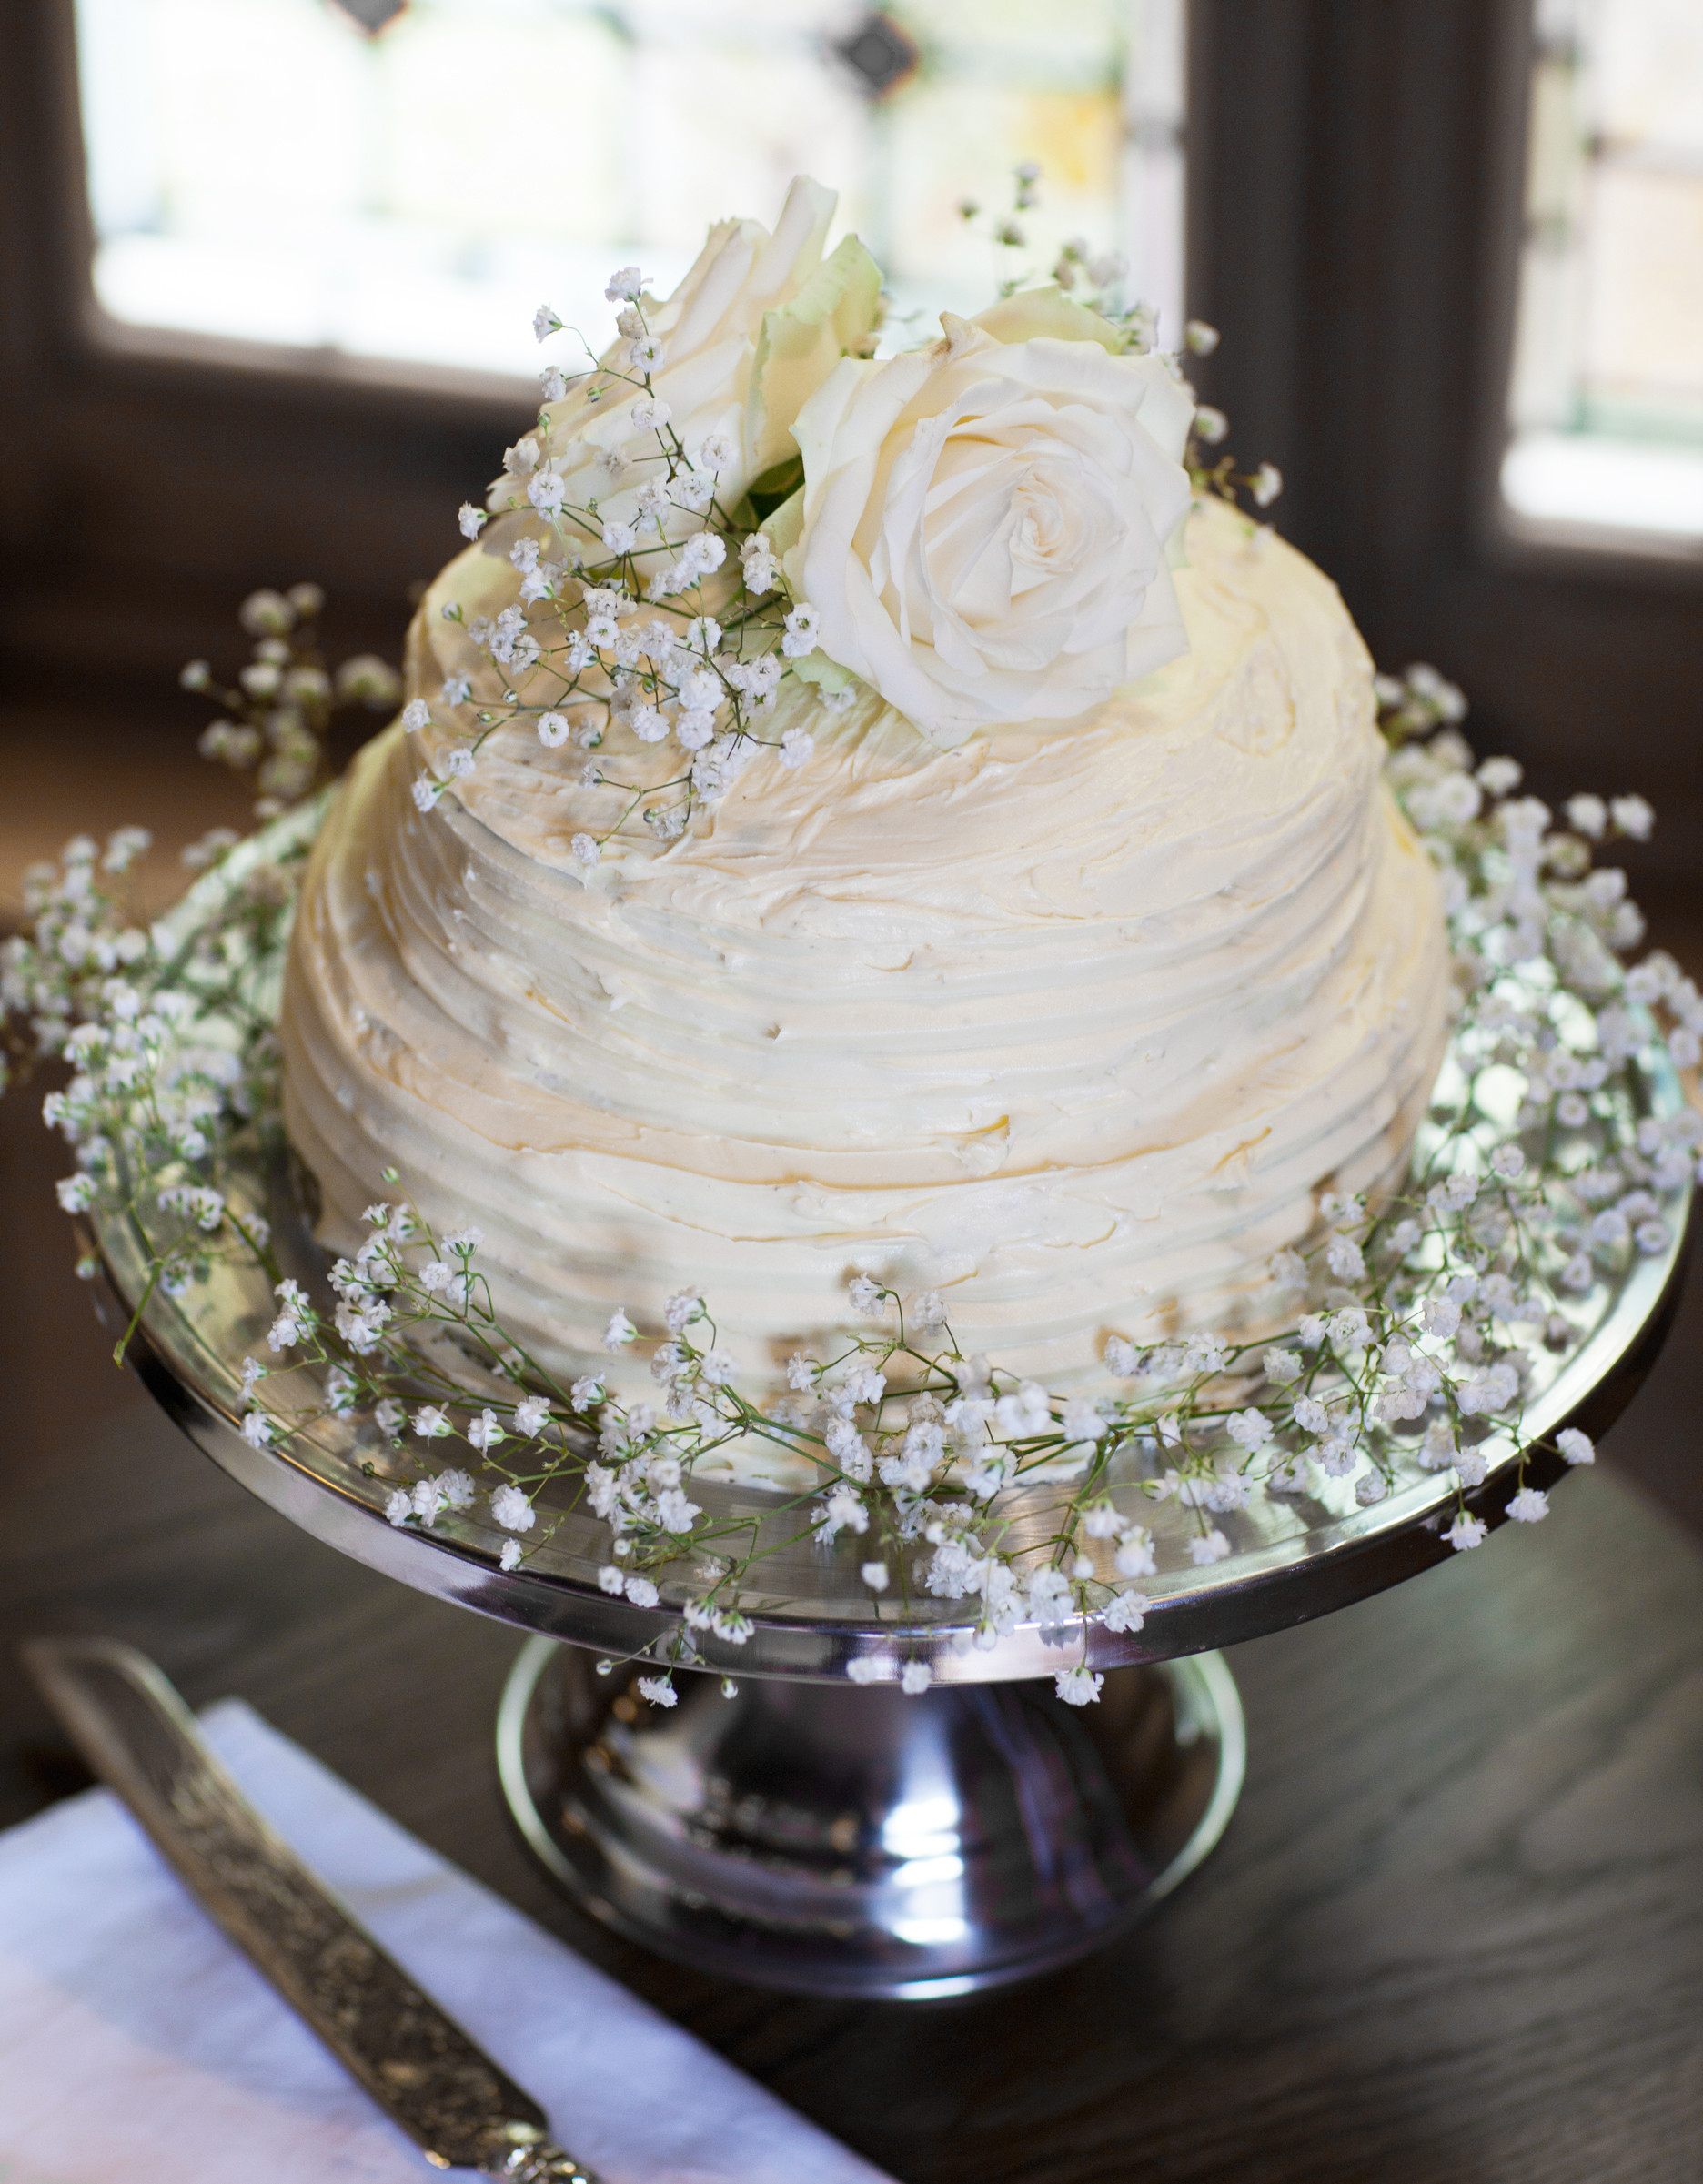 2 Tier Wedding Cakes Buttercream
 DIY Wedding How to make your own wedding cake